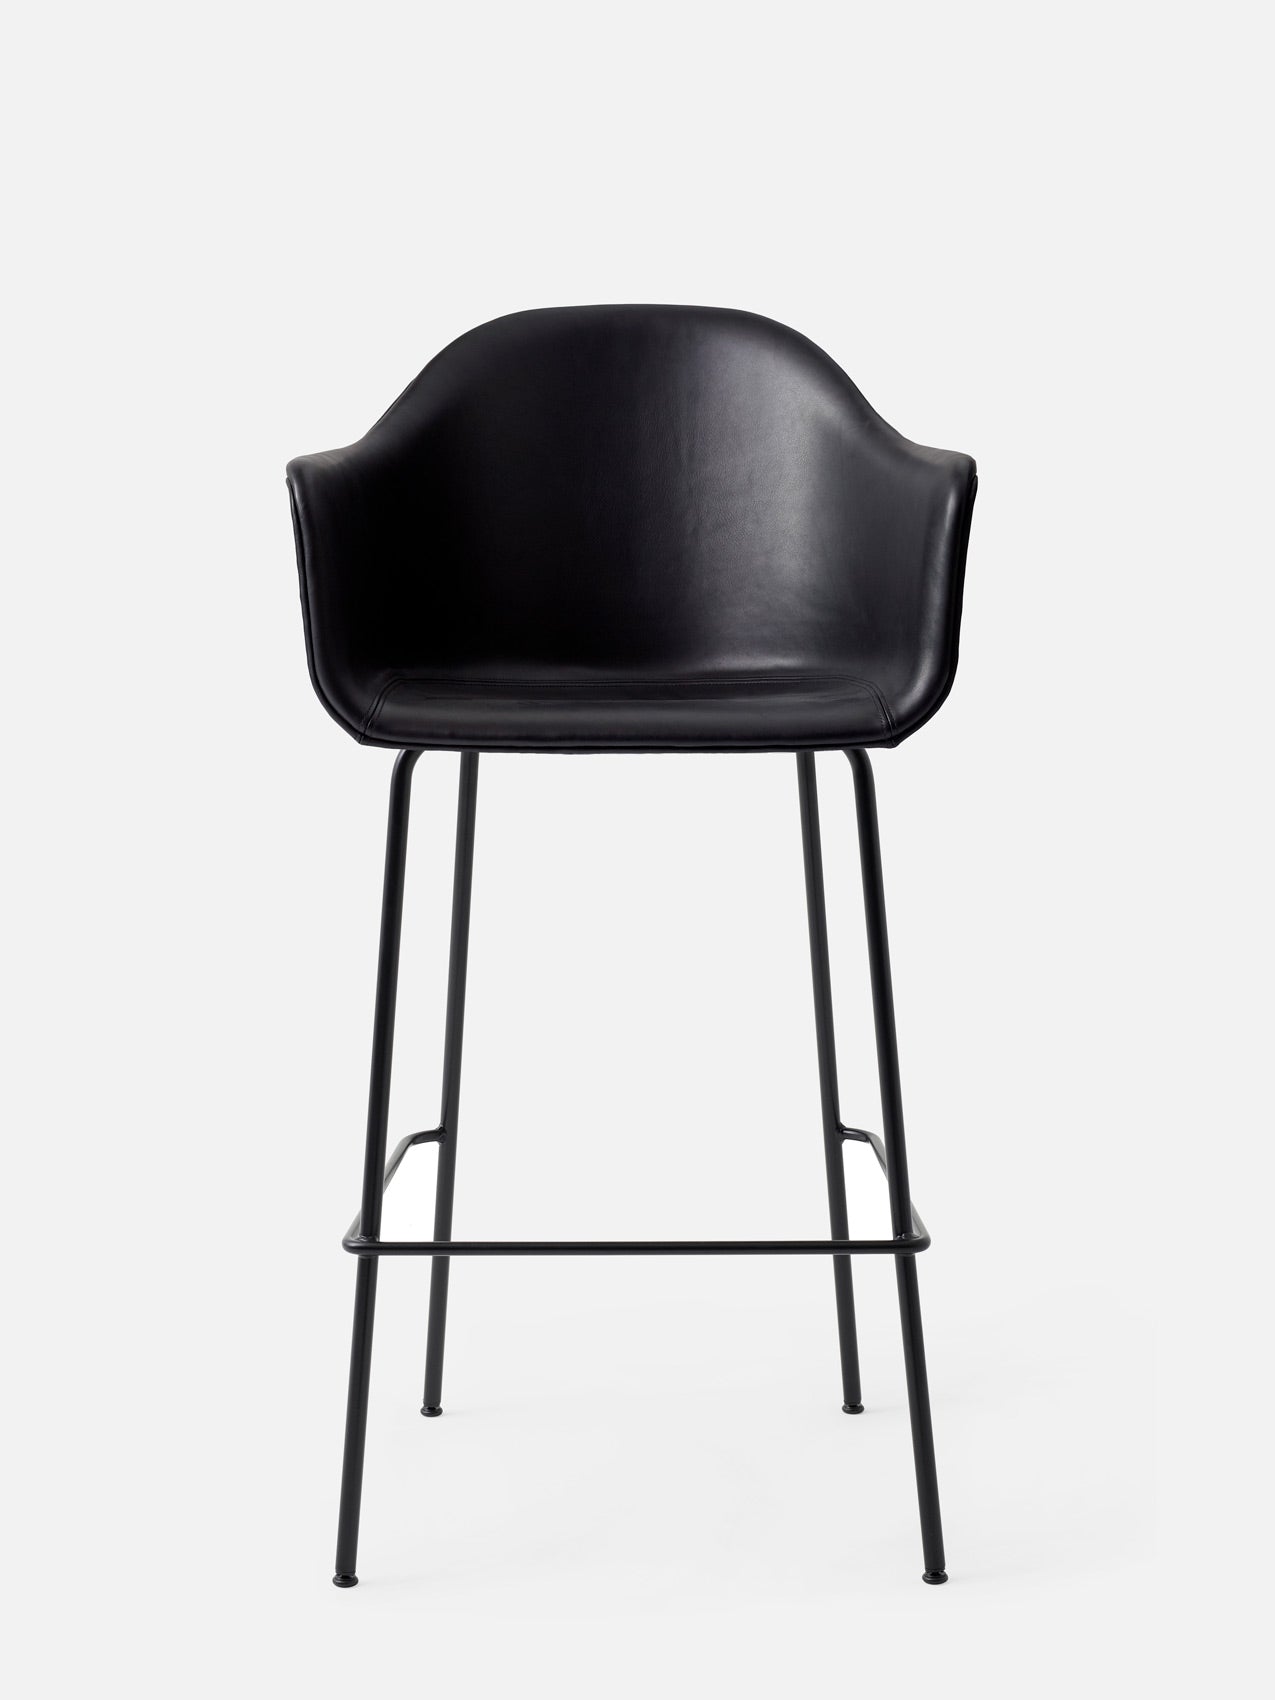 Harbour Arm Chair, Upholstered-Chair-Norm Architects-Bar Height (Seat 28.7in H)/Black Steel-0842 Black/Dakar-menu-minimalist-modern-danish-design-home-decor